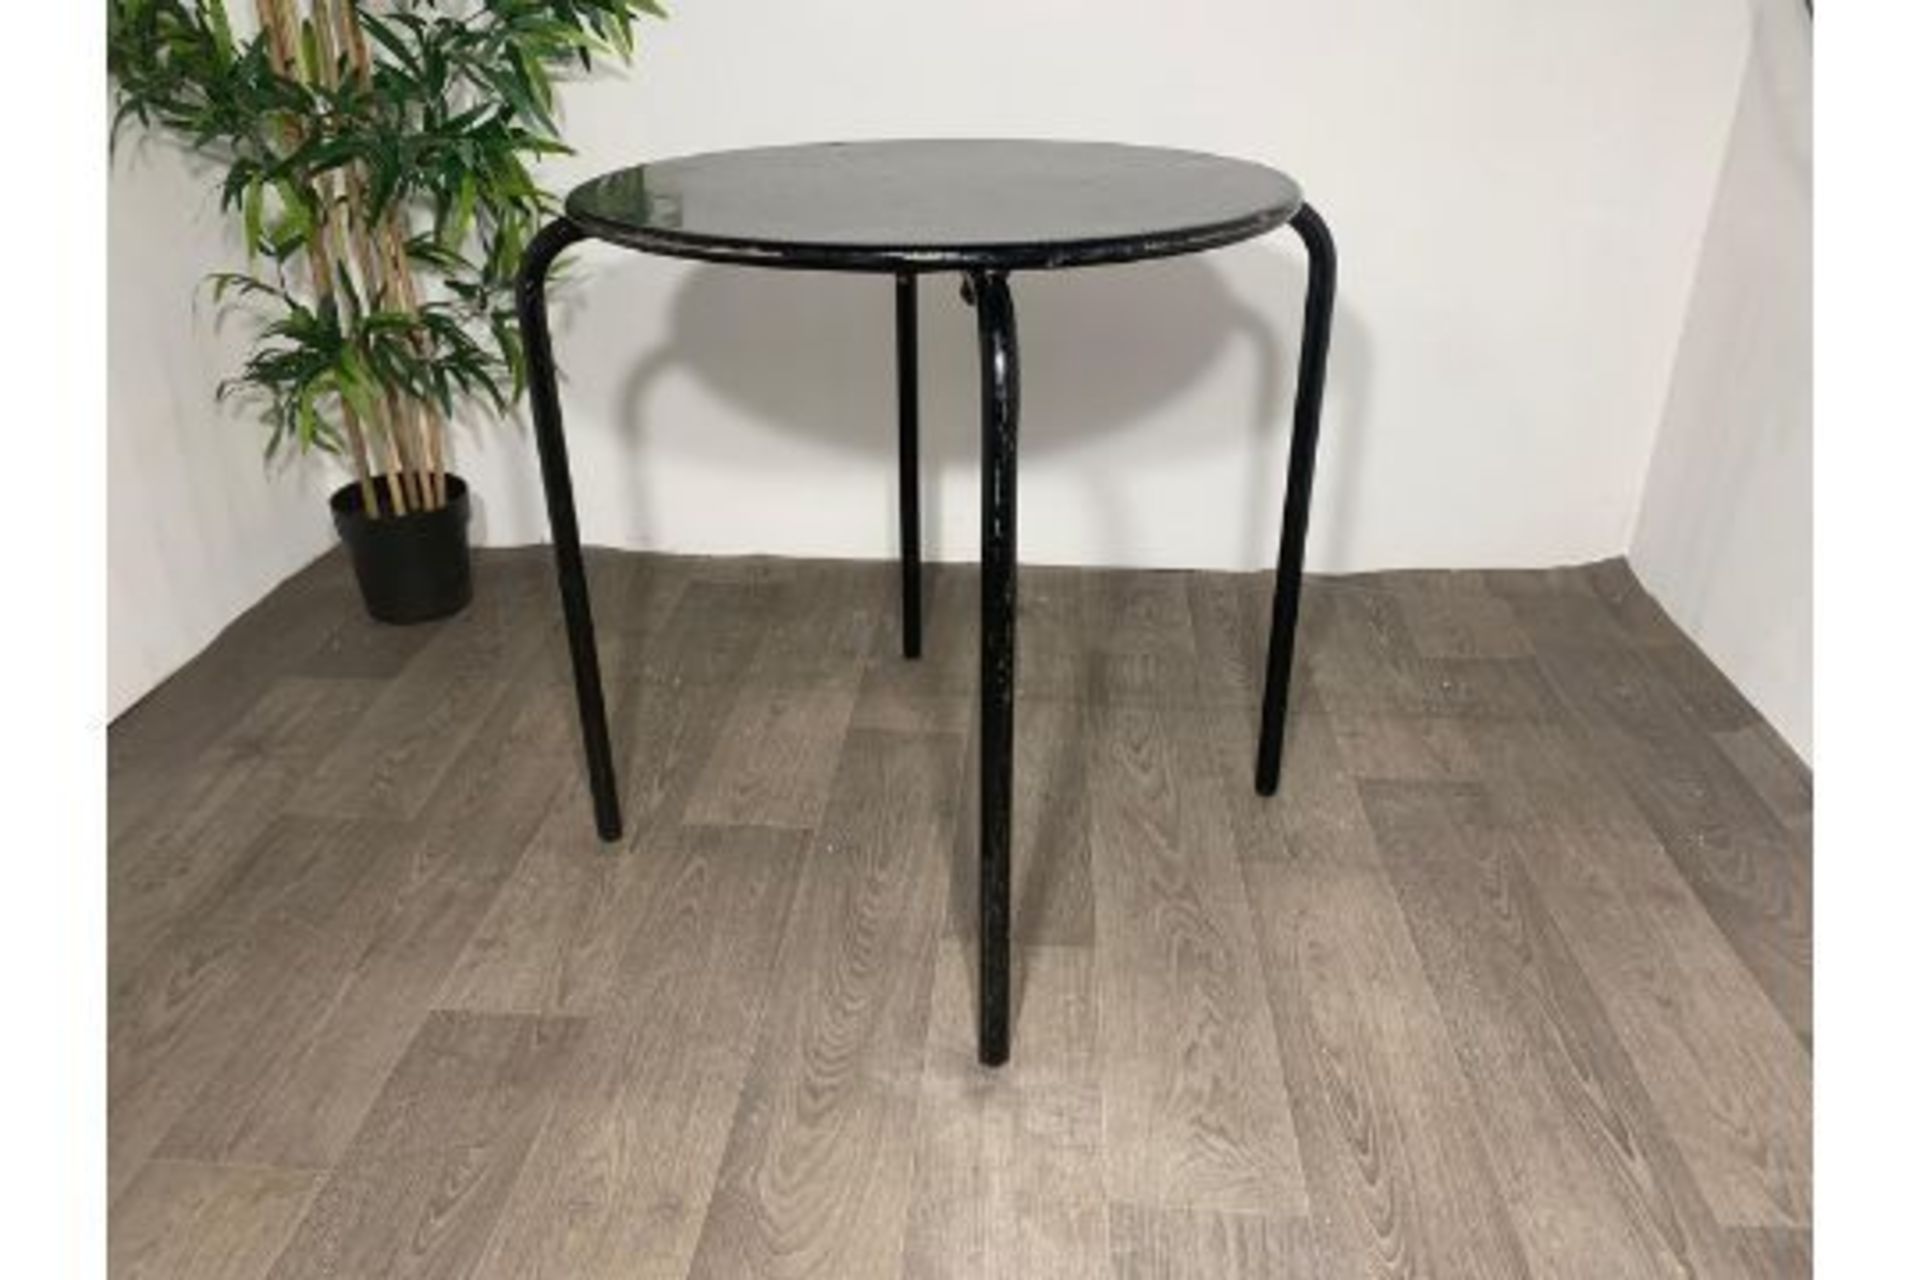 Steel Circular Black Table - Image 2 of 2